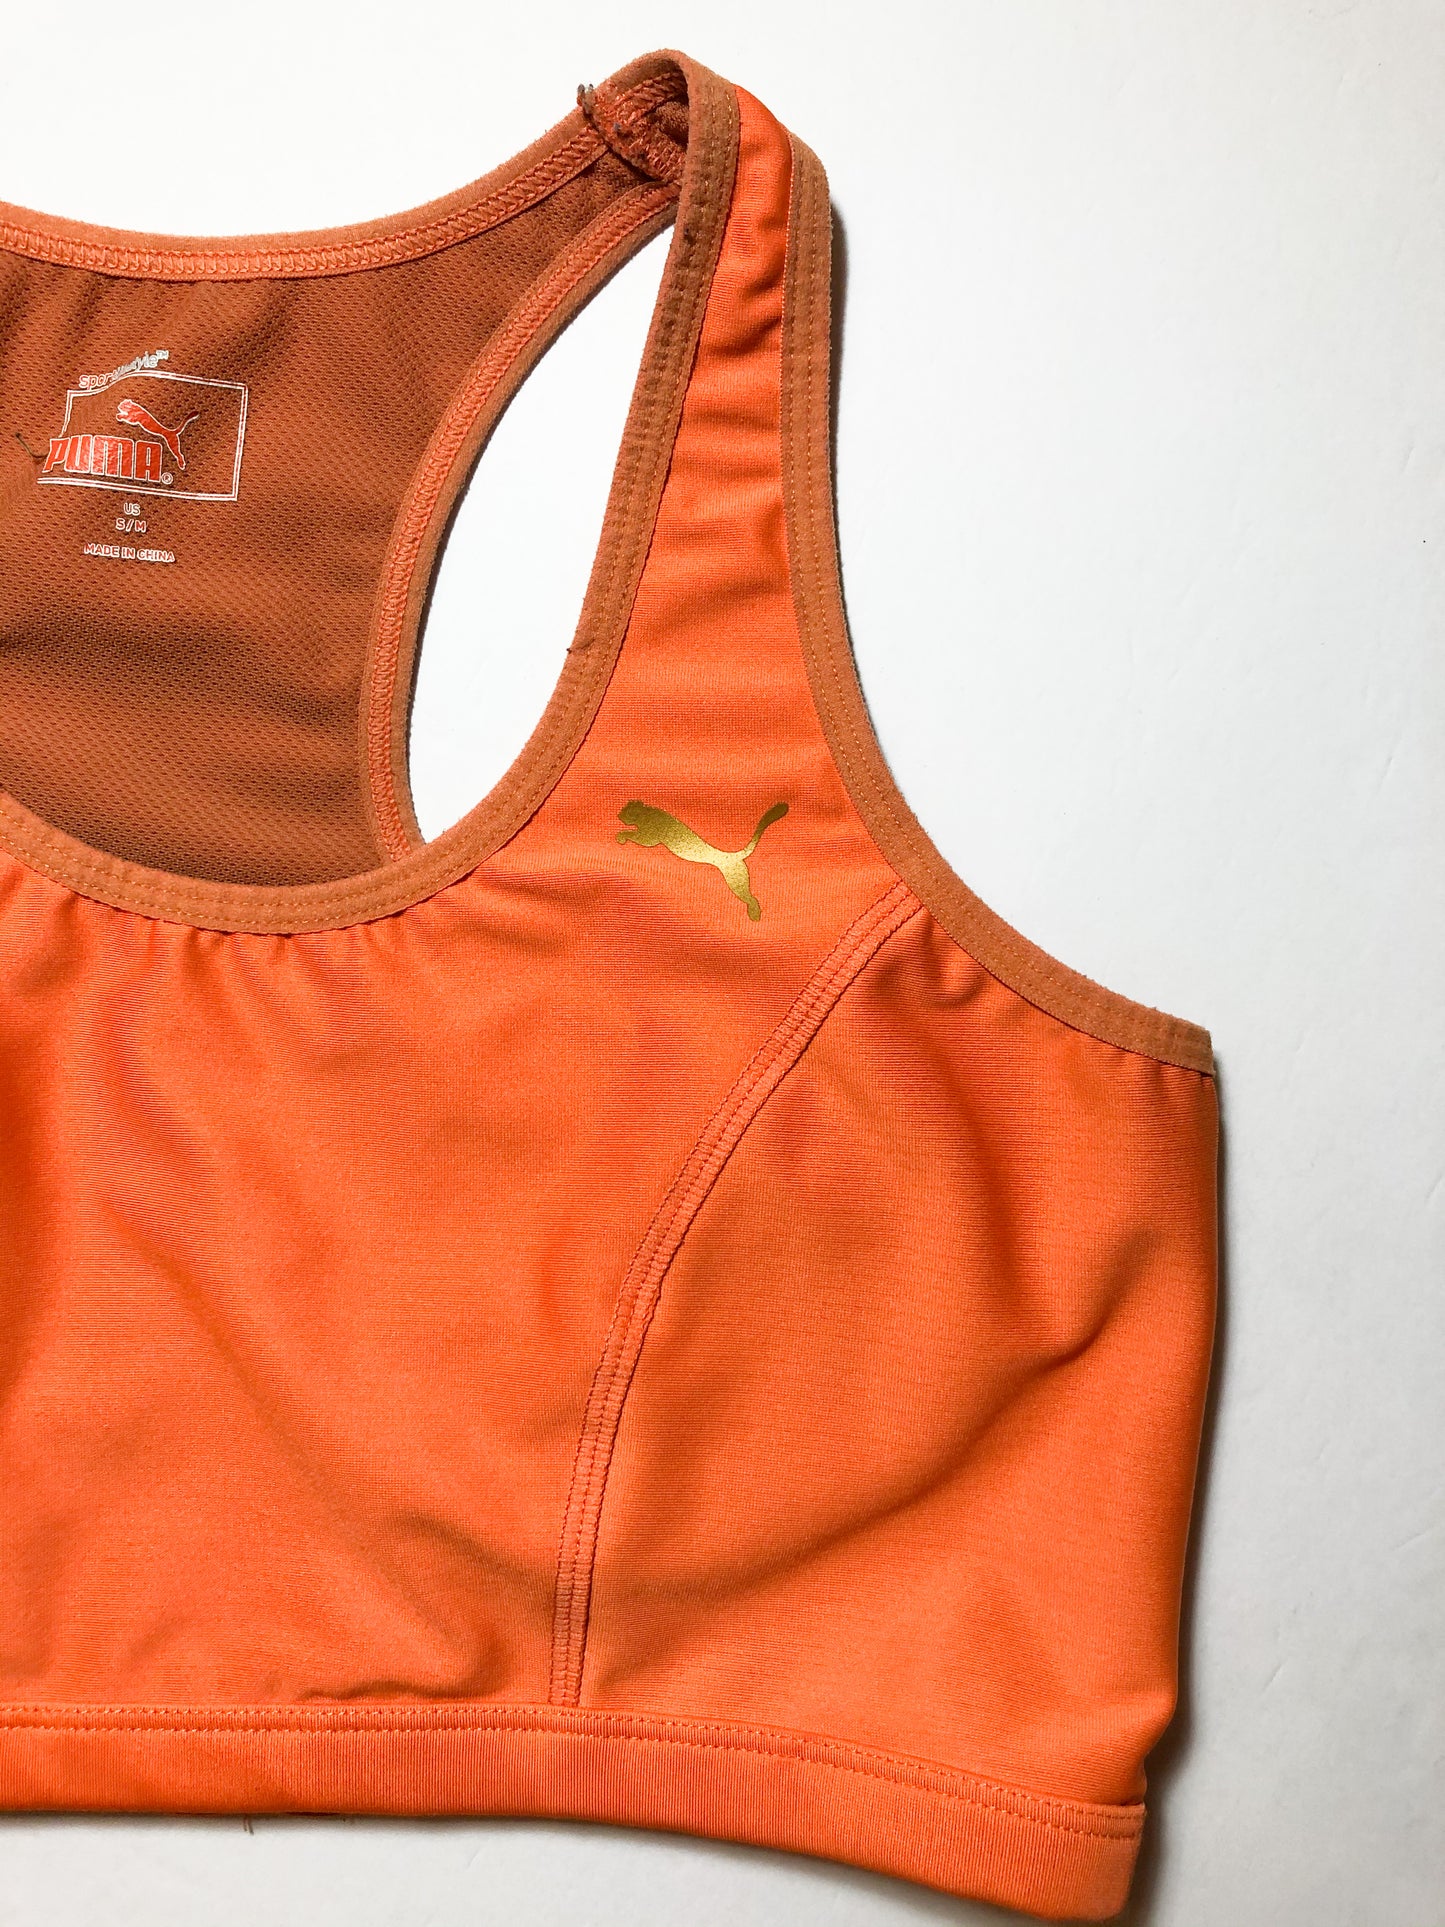 Puma Orange Sports Bra with Back Cutout - S/M